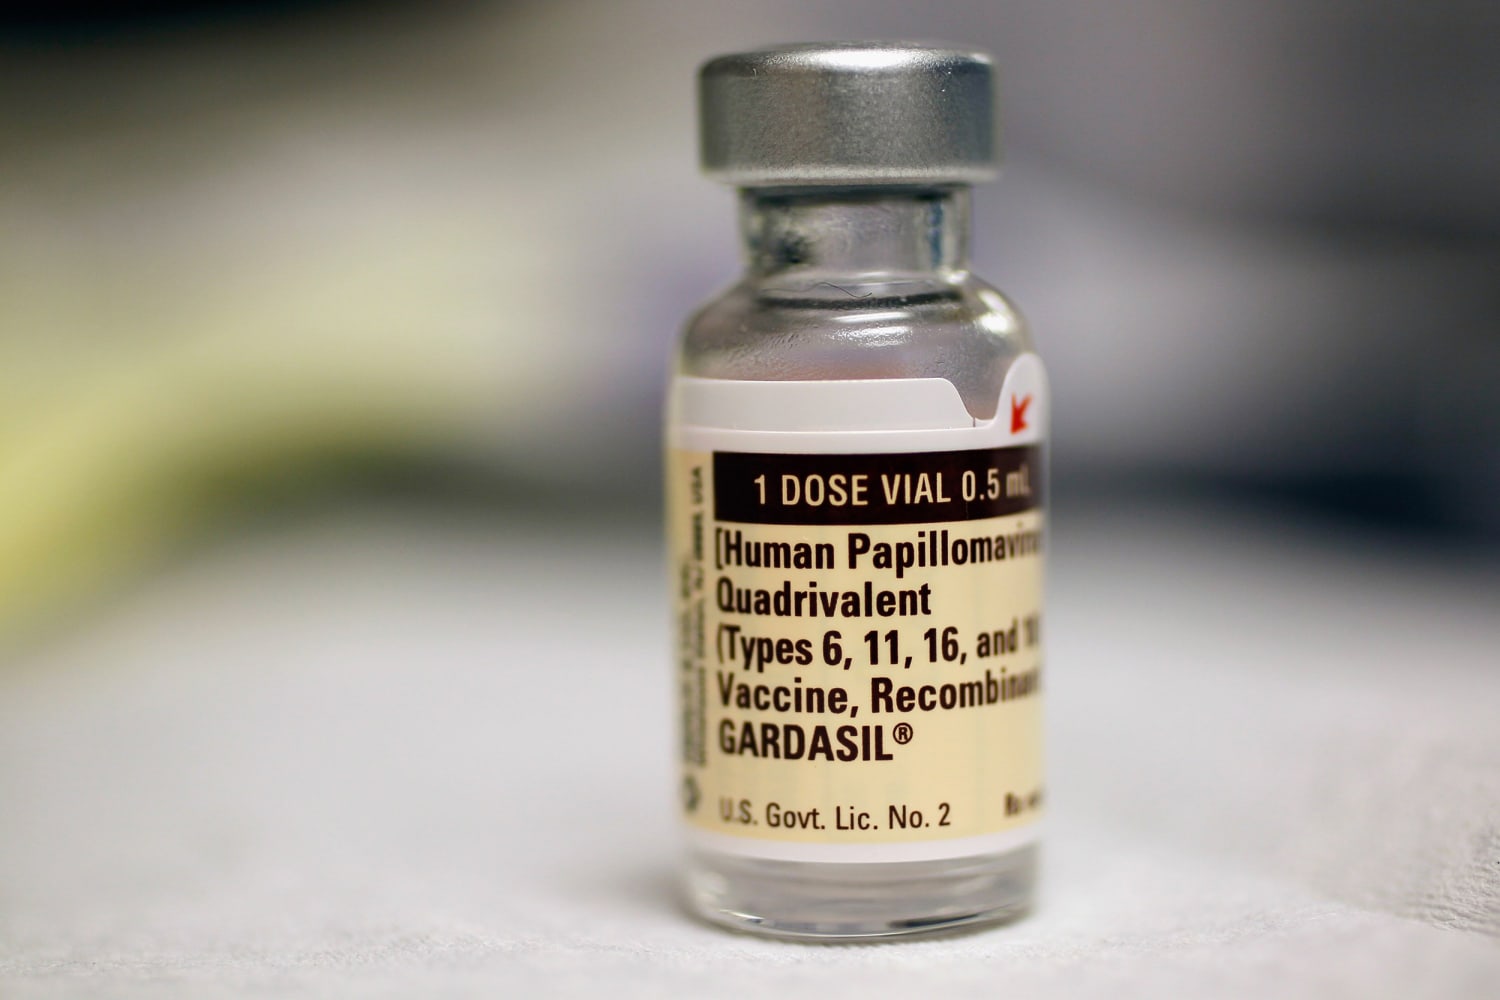 hpv virus vaccine age